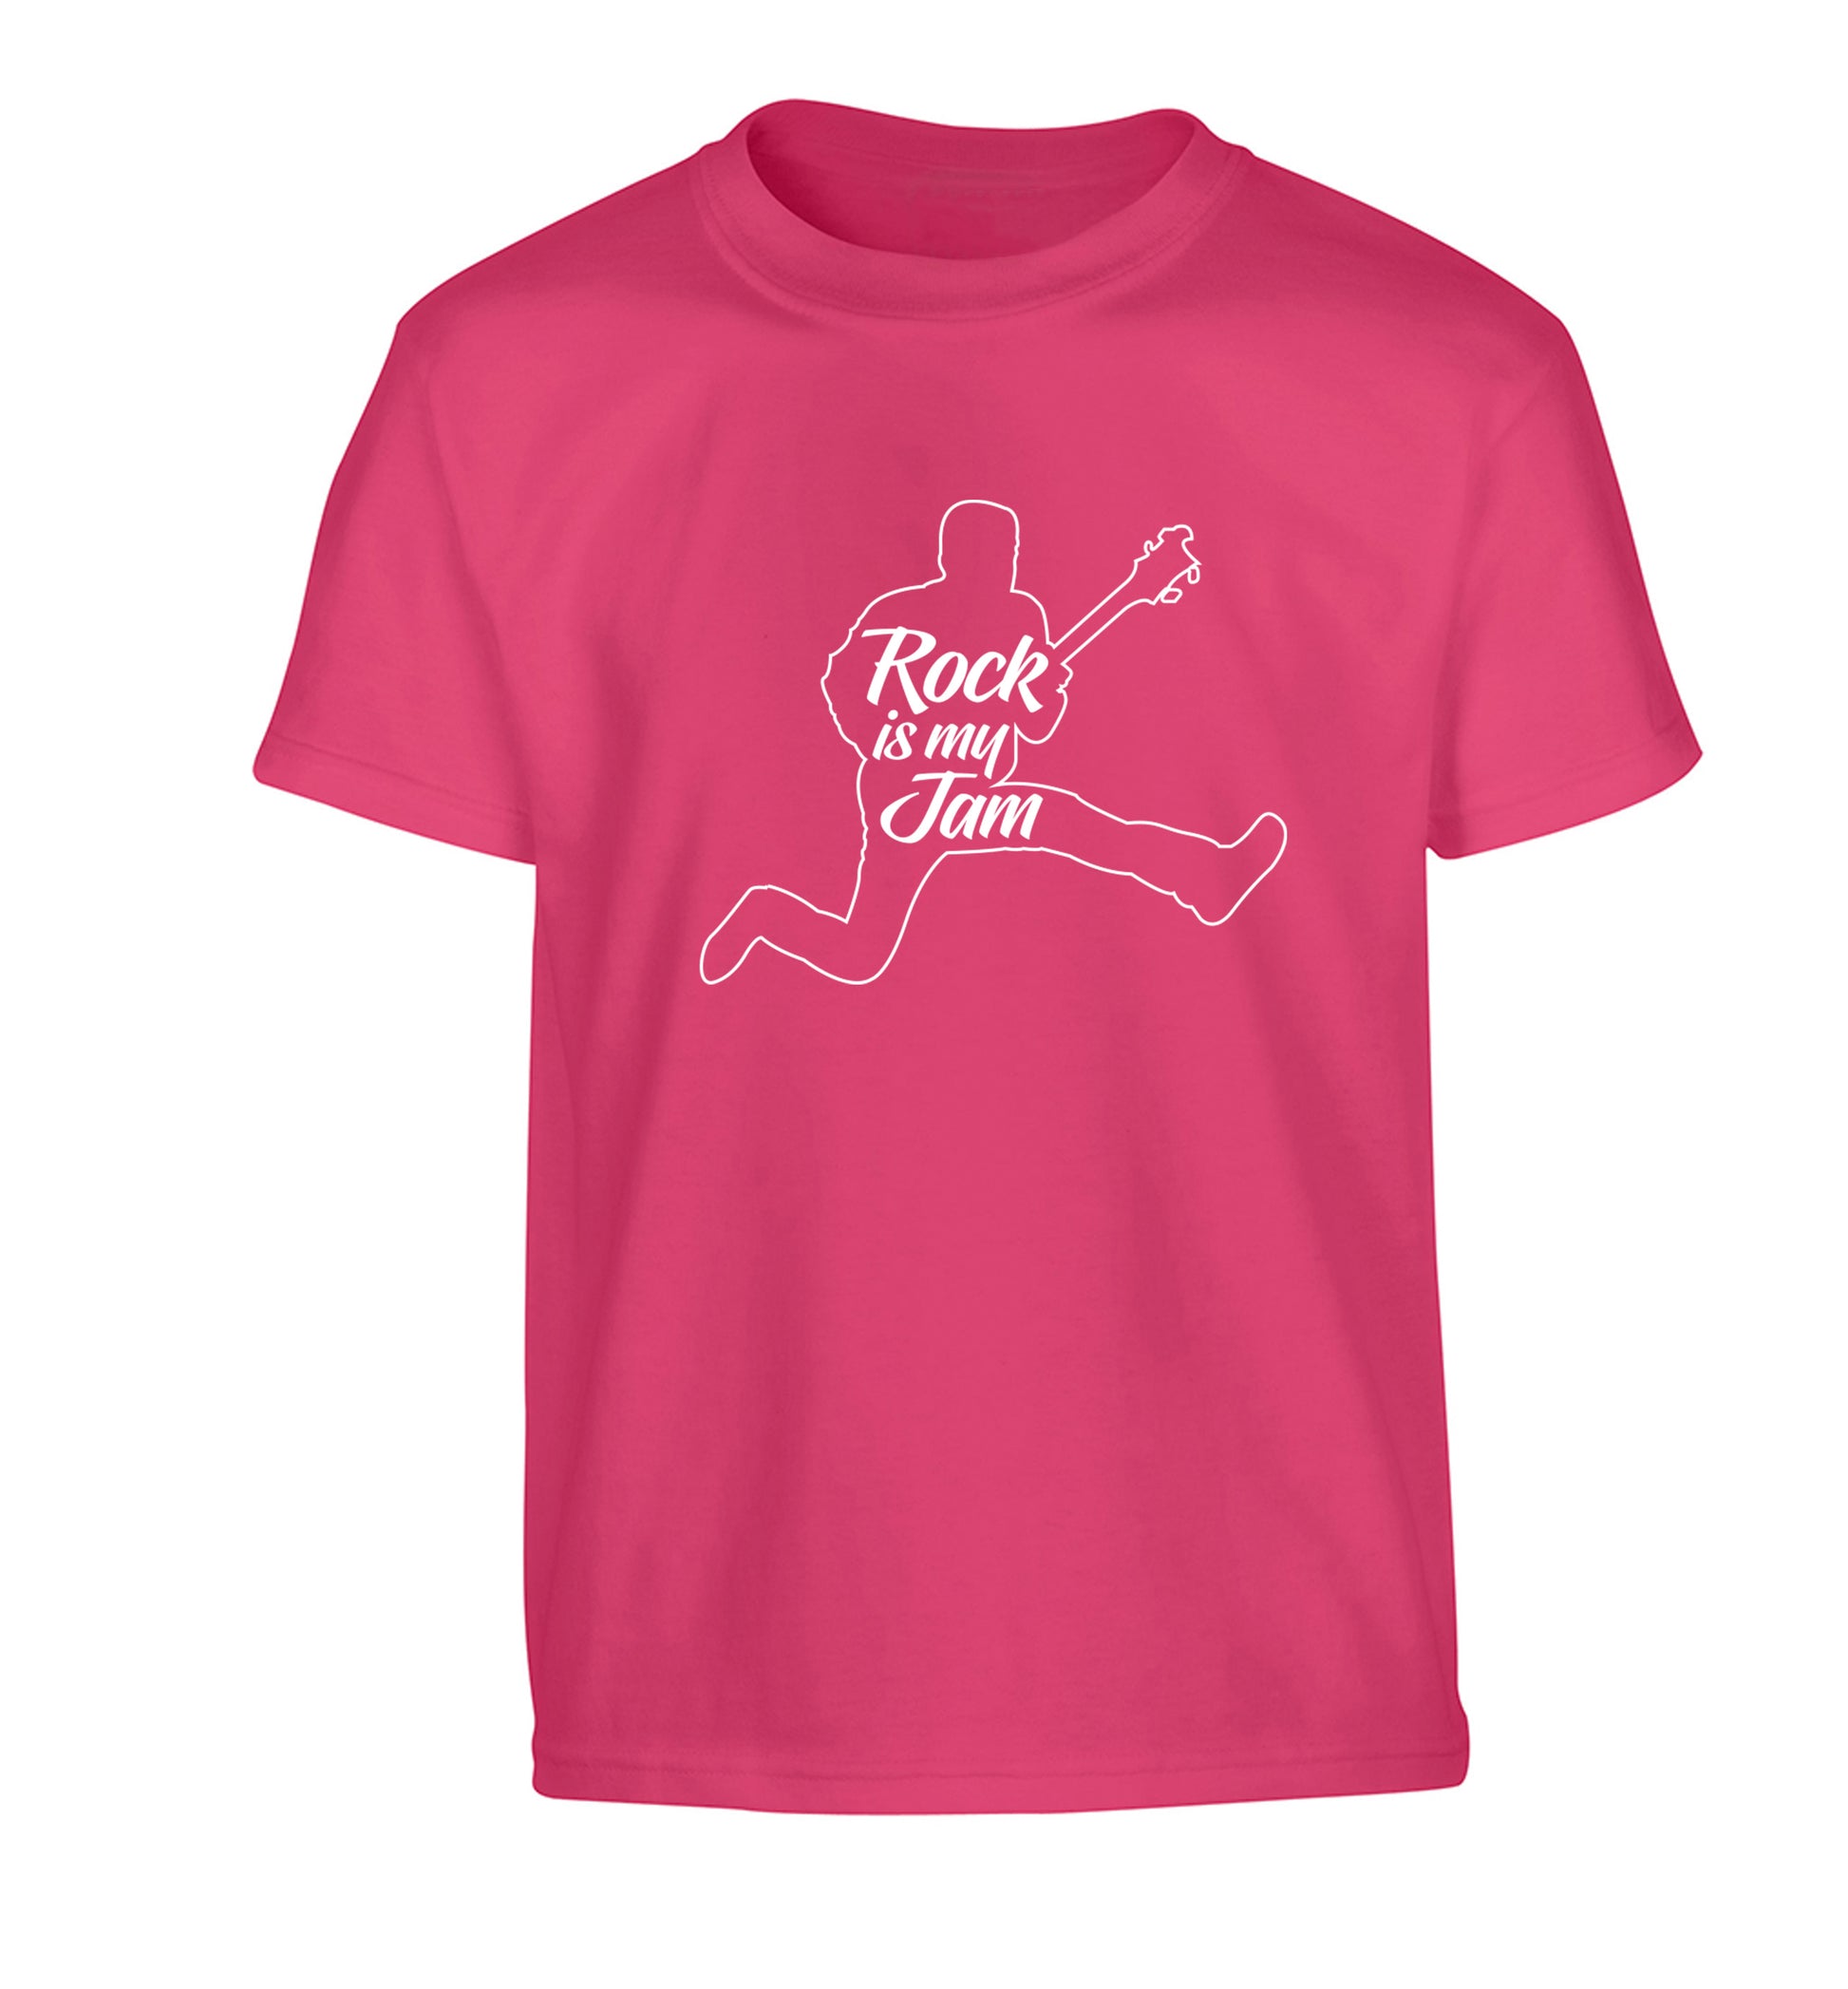 Rock is my jam Children's pink Tshirt 12-13 Years